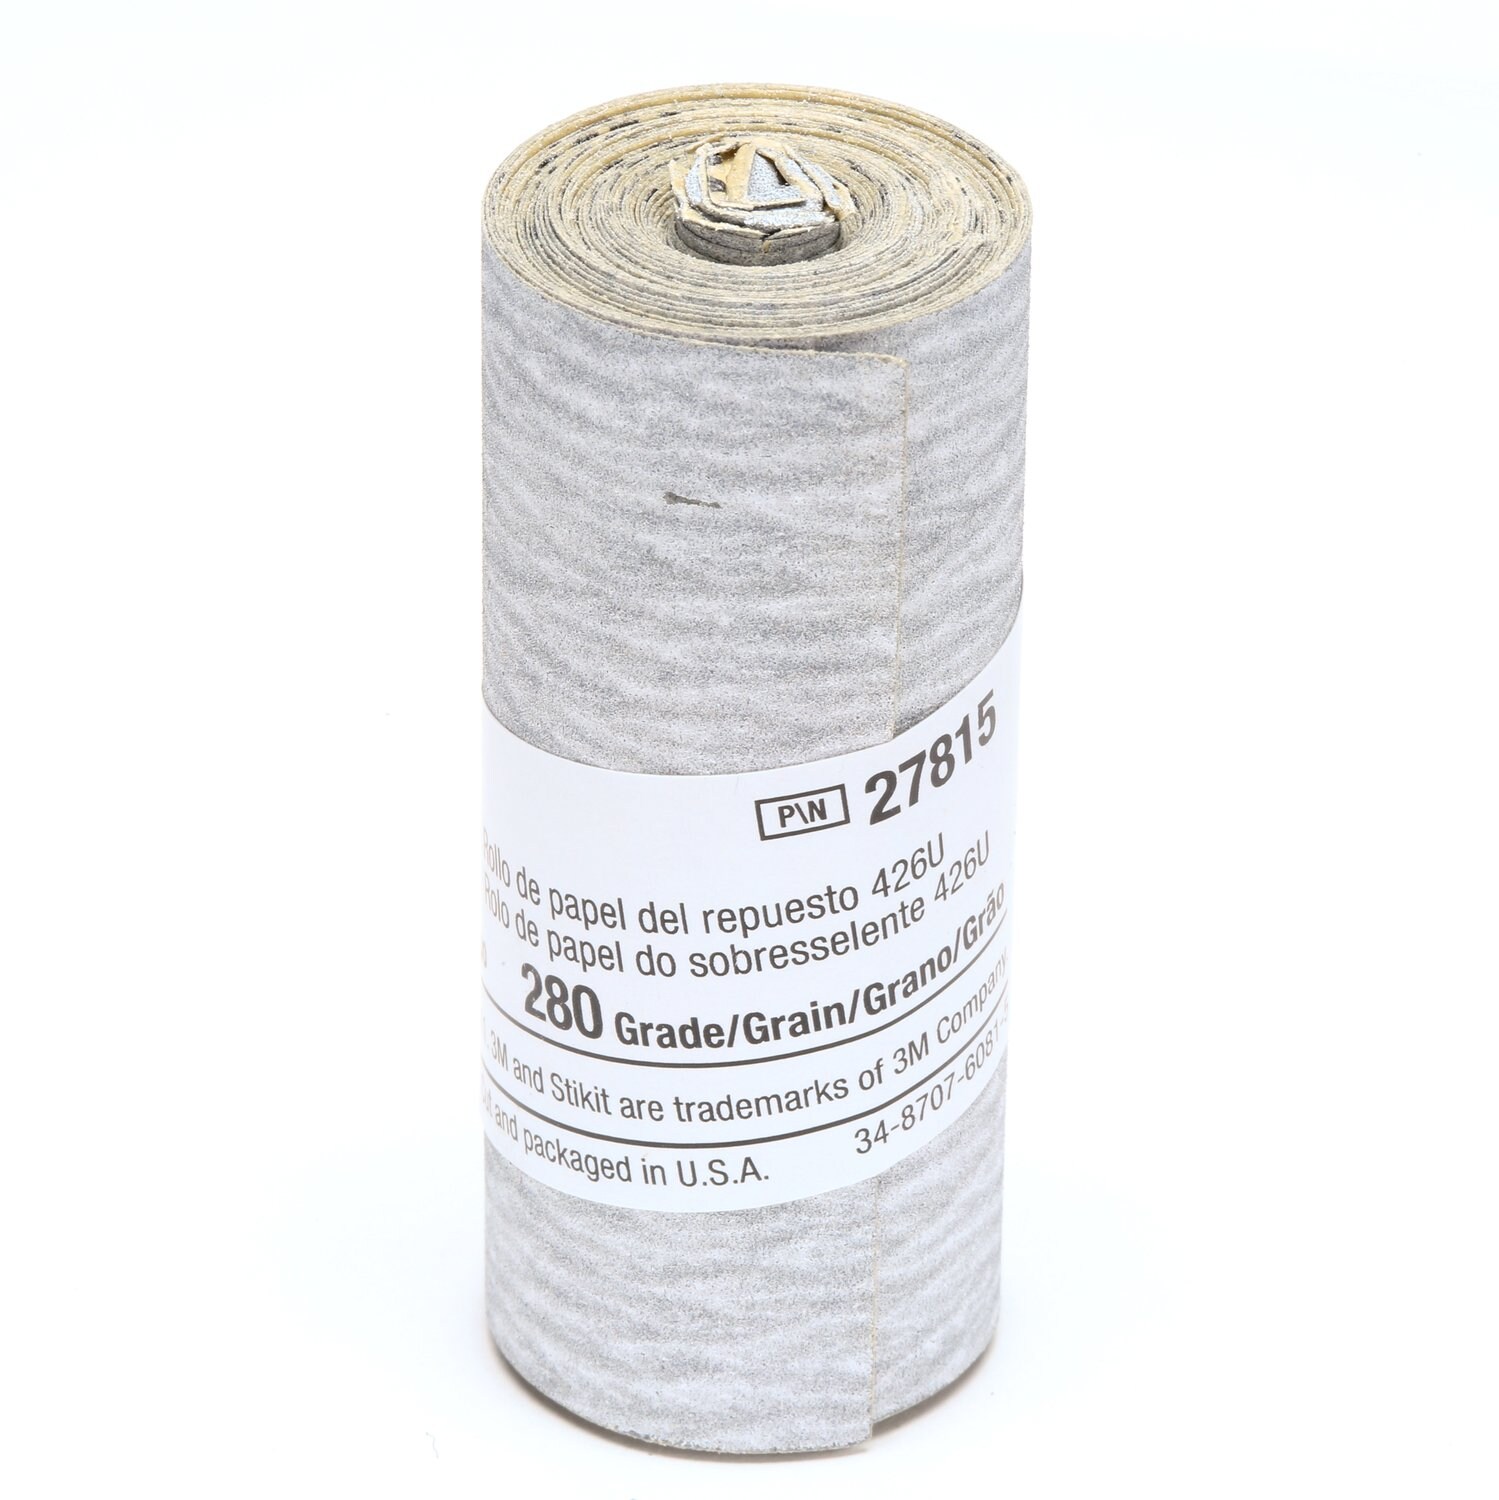 7010326458 - 3M Stikit Paper Refill Roll 426U, 280 A-weight, 2-1/2 in x 100 in,
10/Carton, 50 ea/Case